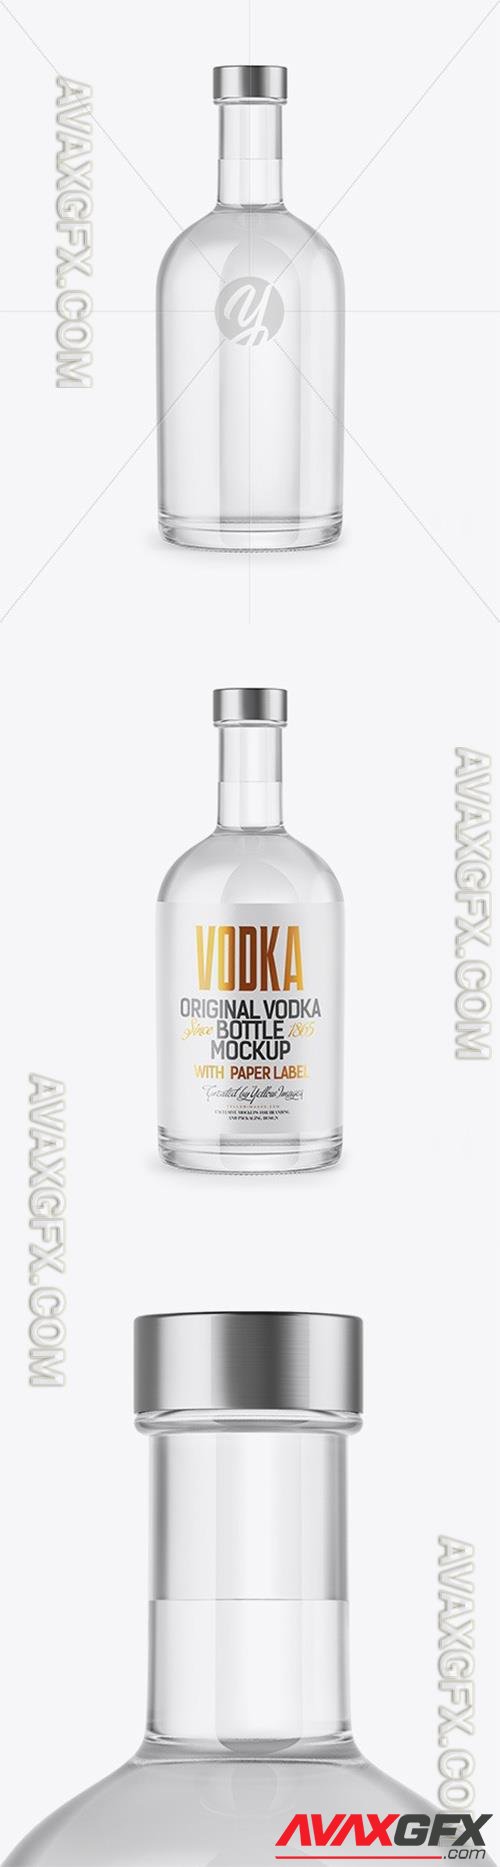 Clear Glass Vodka Bottle Mockup 47847 TIF